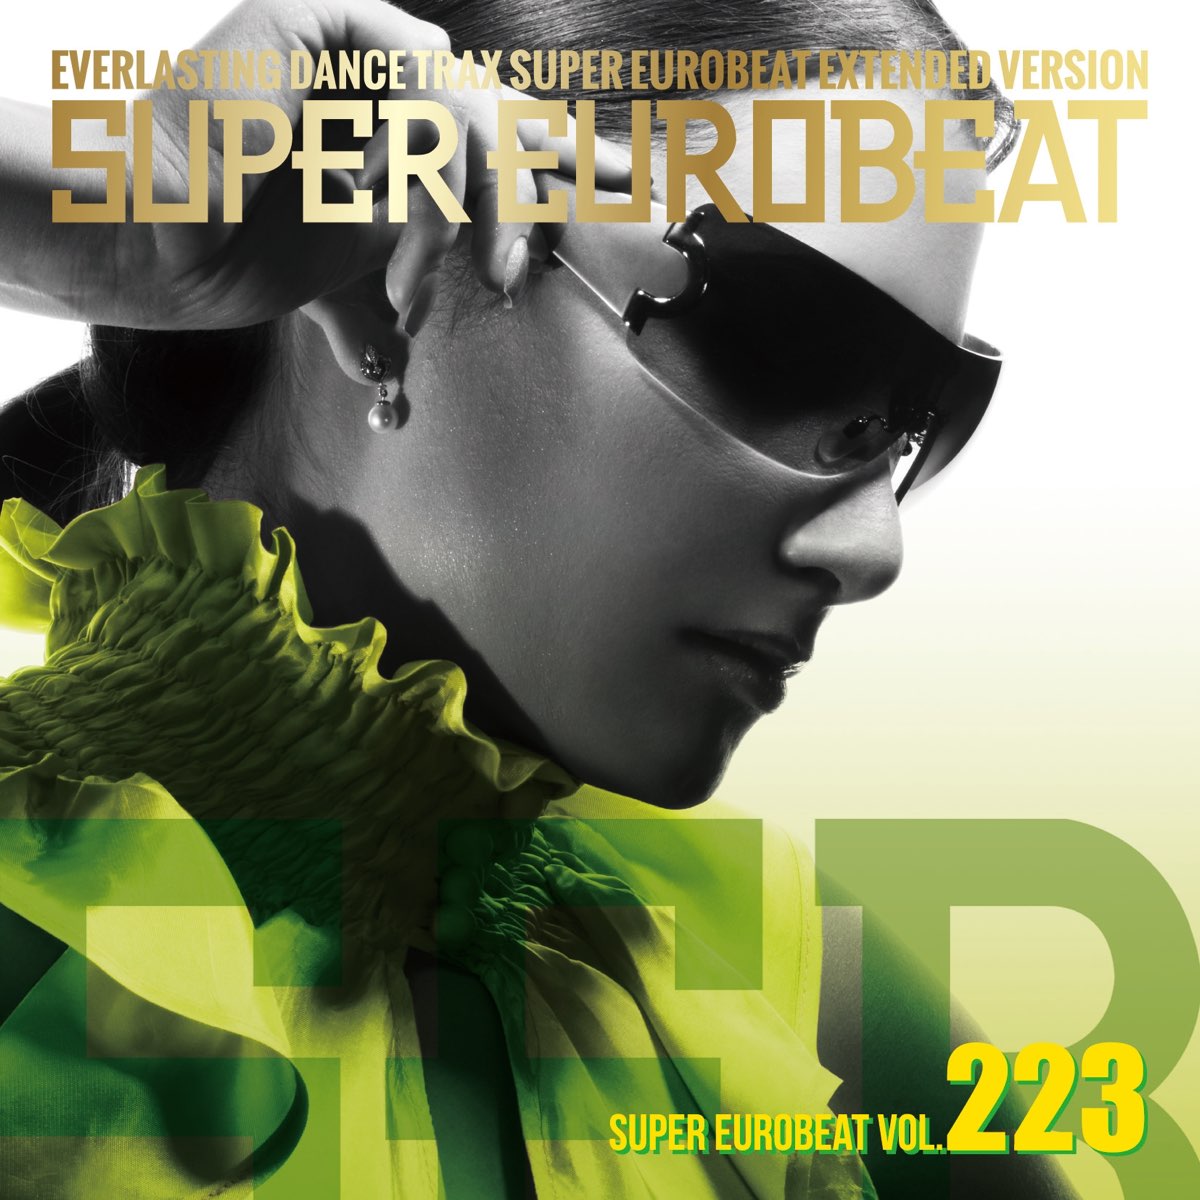 Super Eurobeat, Vol. 223 - Album by Various Artists - Apple Music